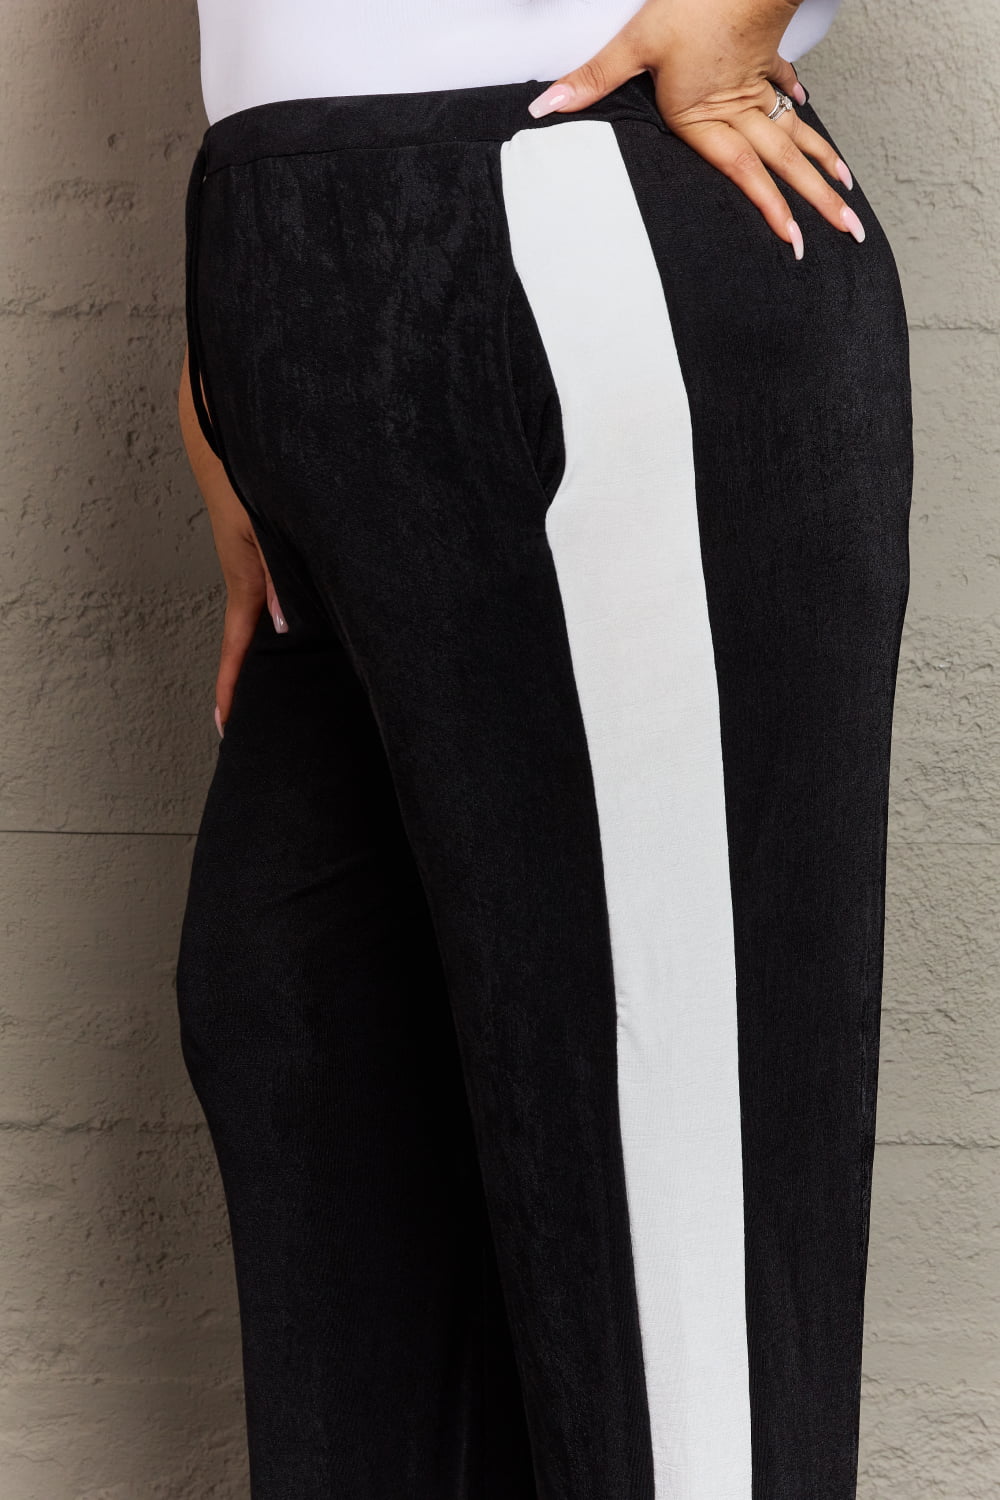 Culture Code Keep It Casual Full Size Color Block Stripe Long Pants in Black - Global Village Kailua Boutique